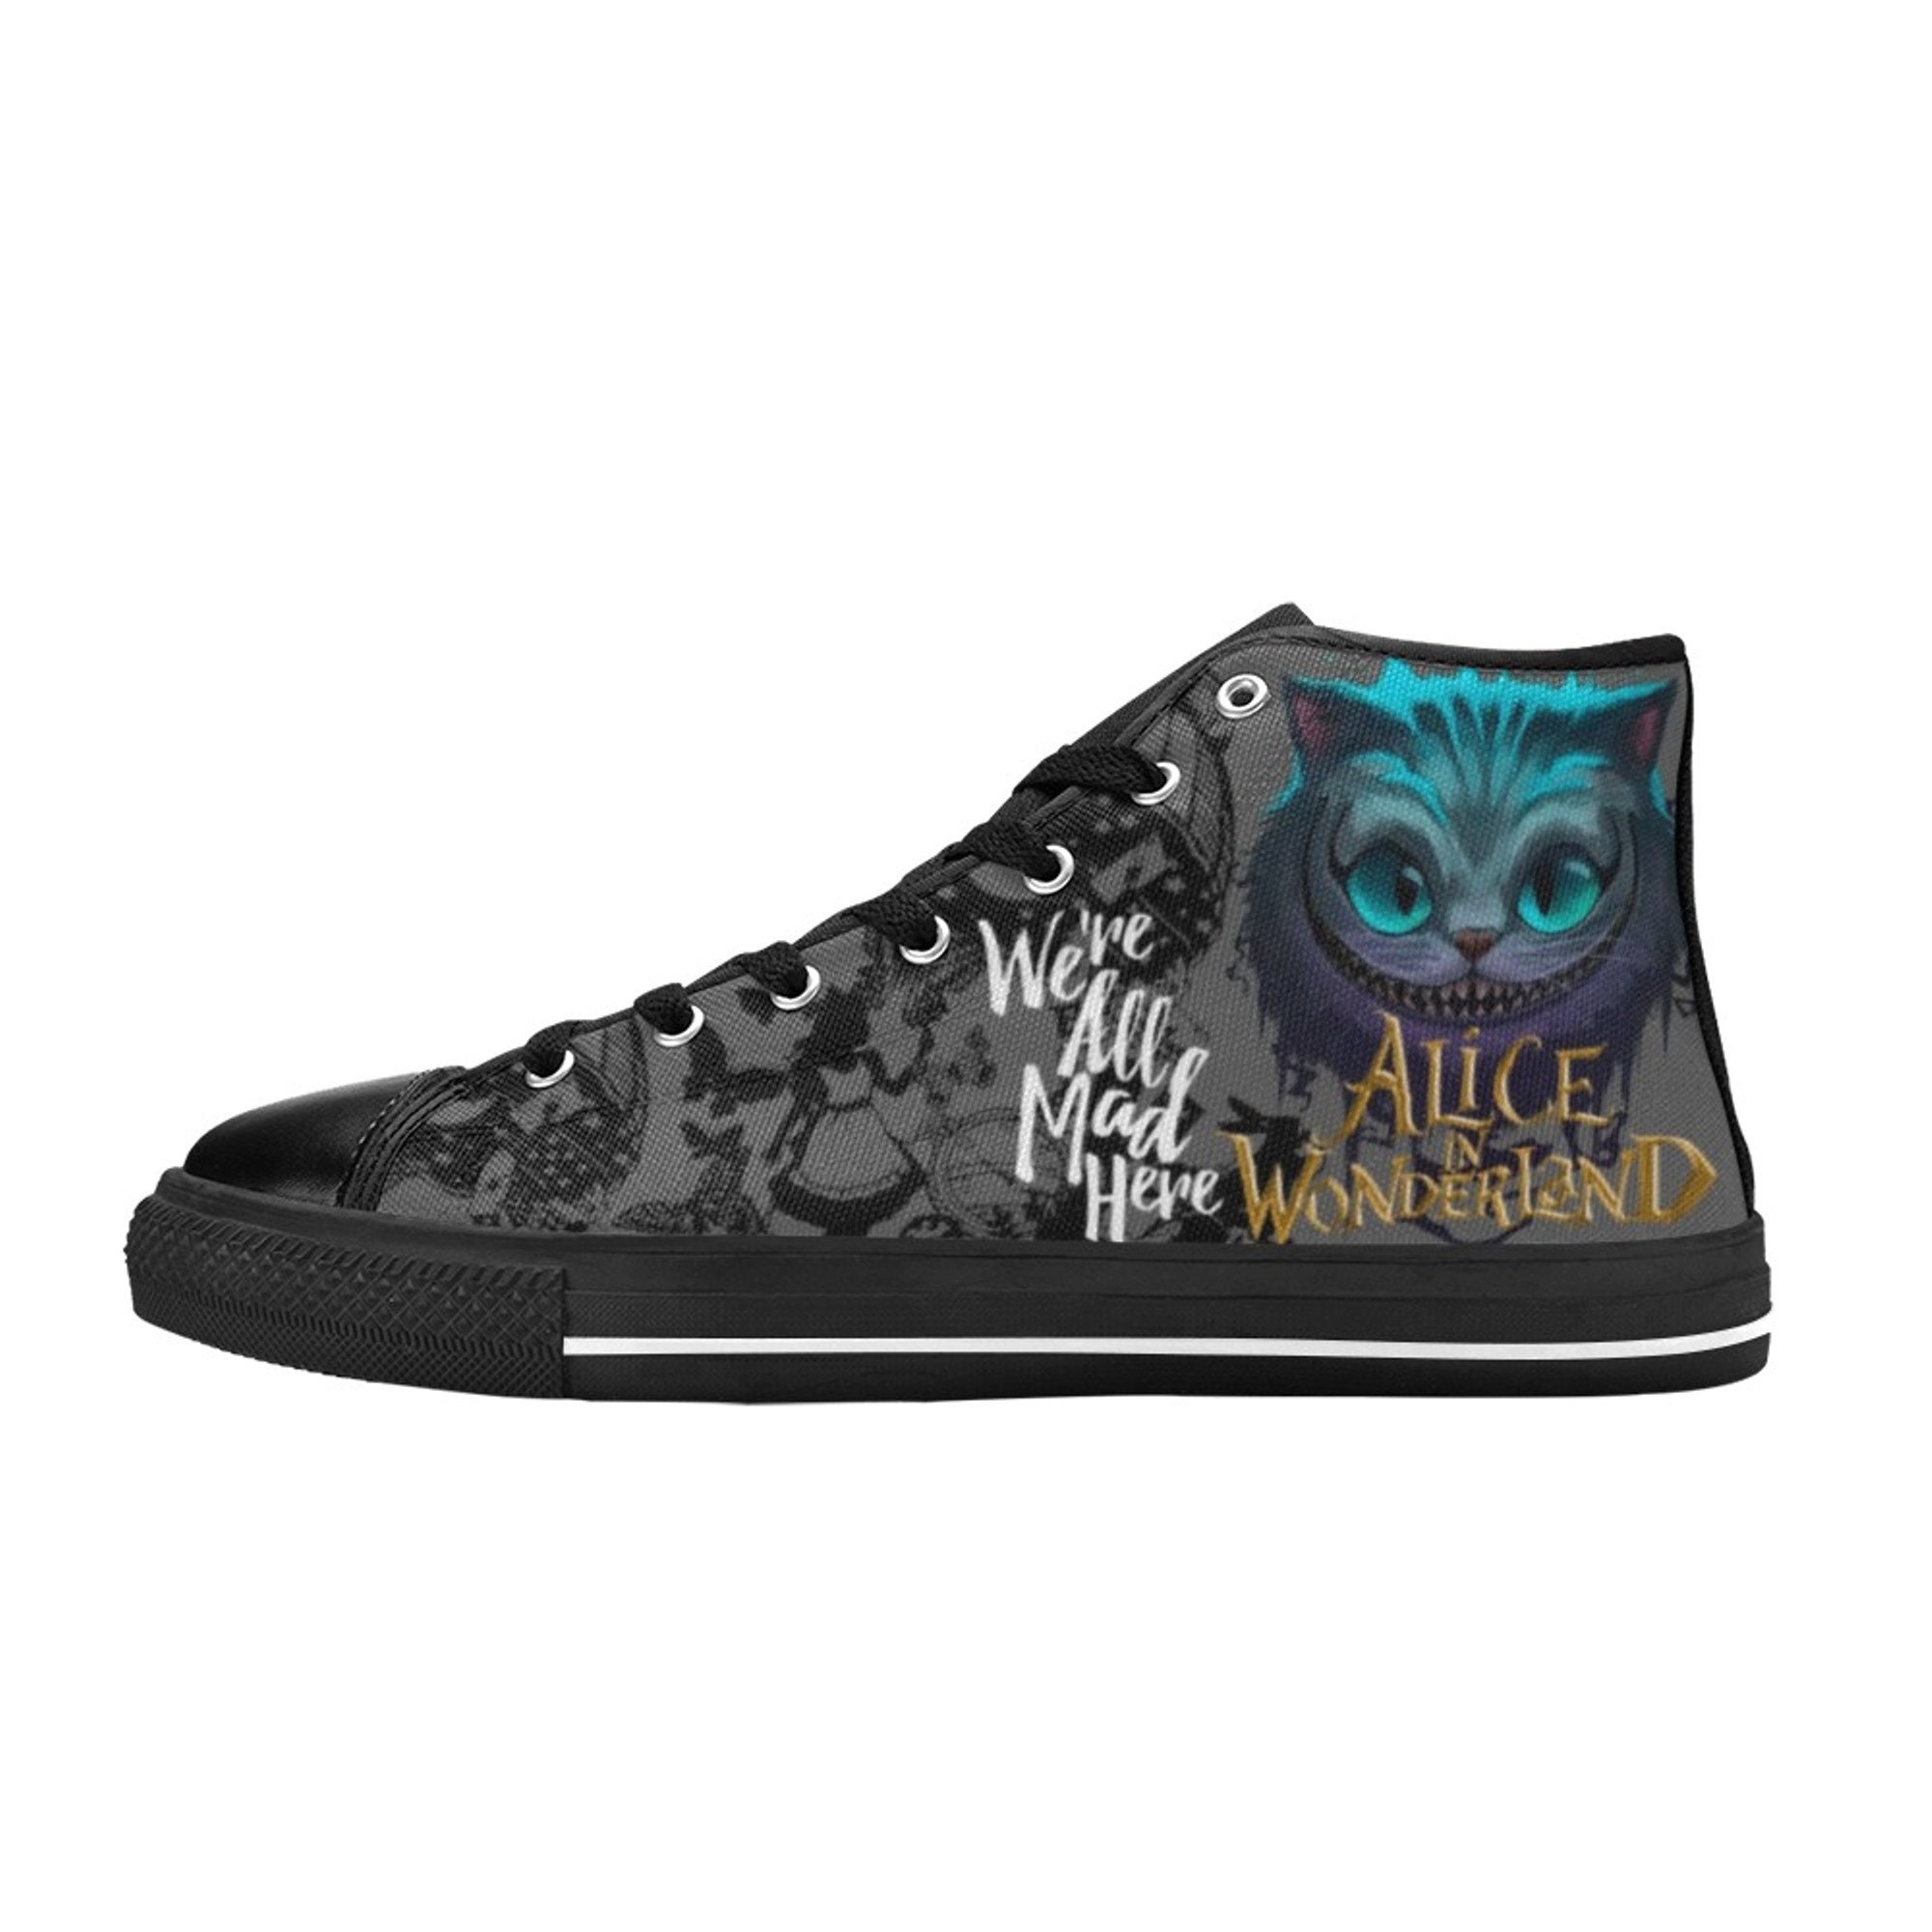 Custom Alice in Wonderland Cheshire Cat High Top Sneakers